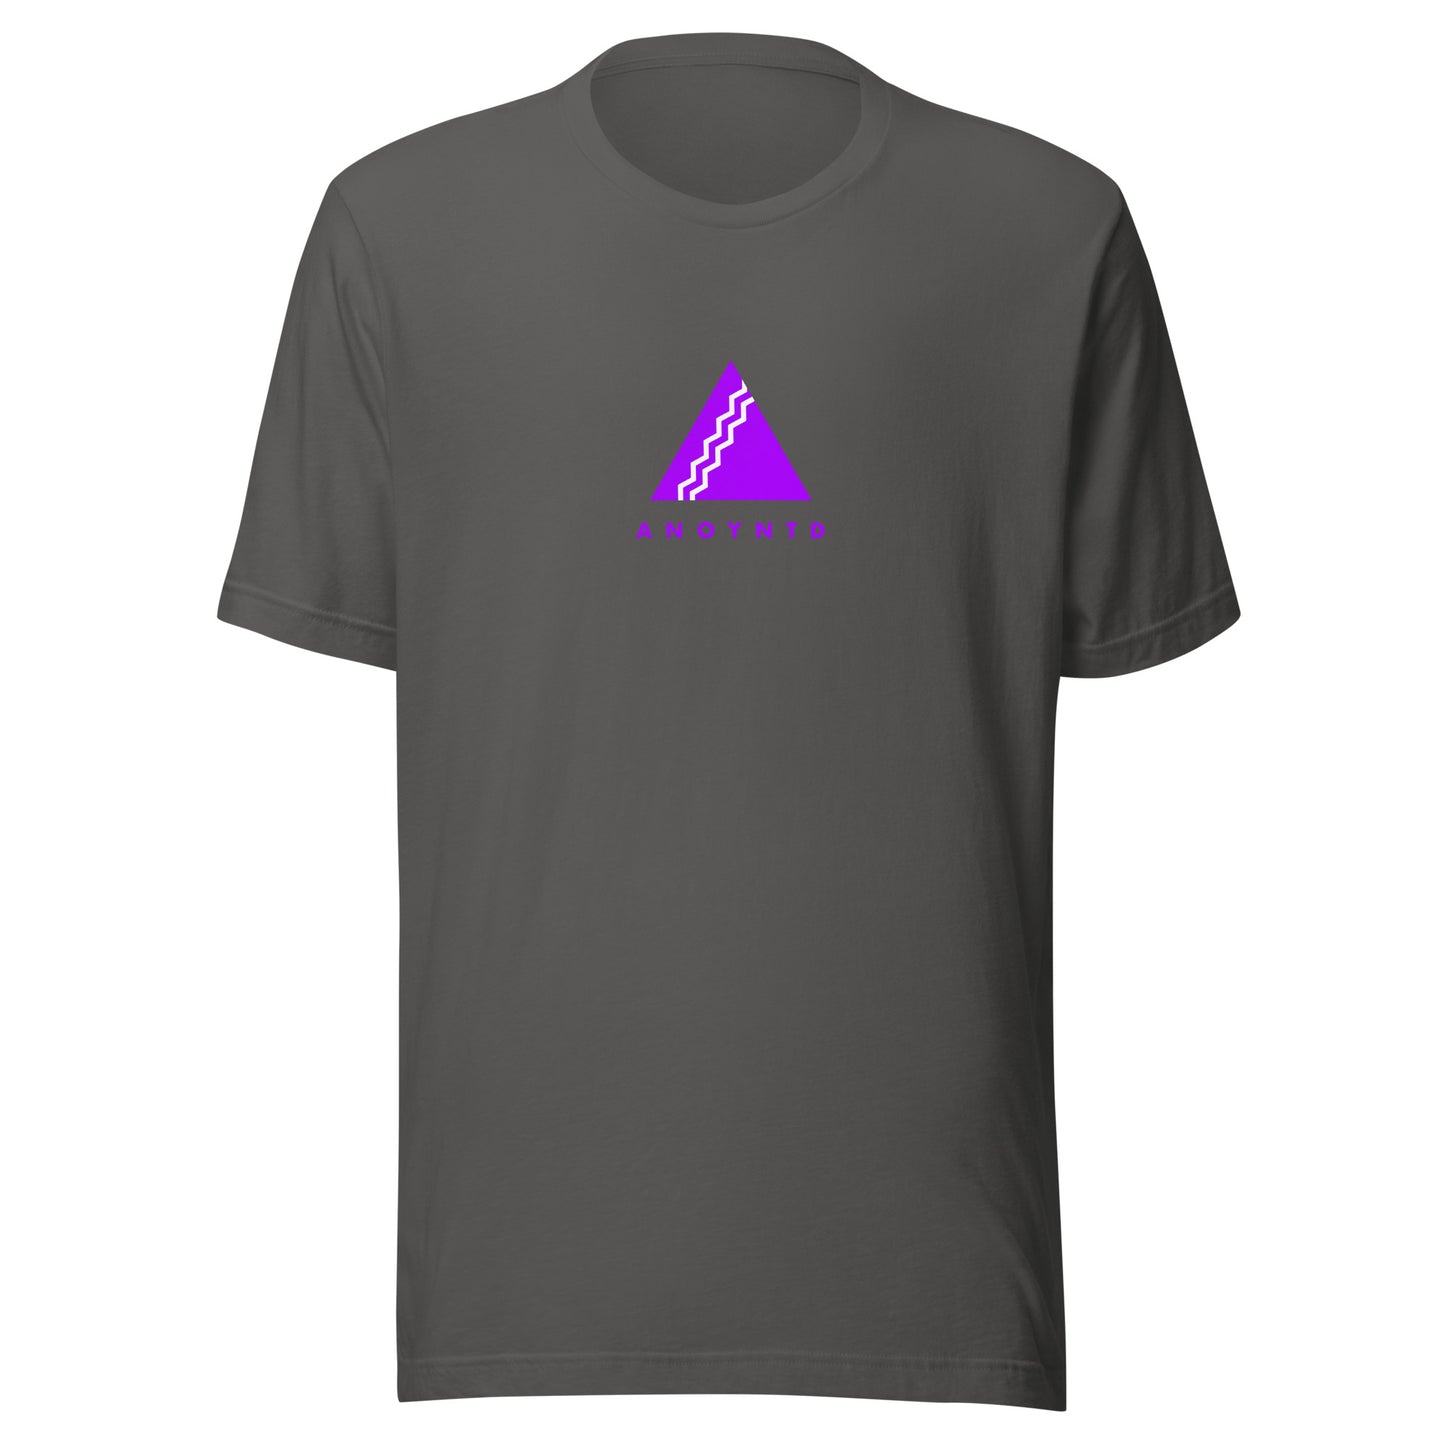 ANOYNTD Pyramid Series (Pur) Unisex t-shirt